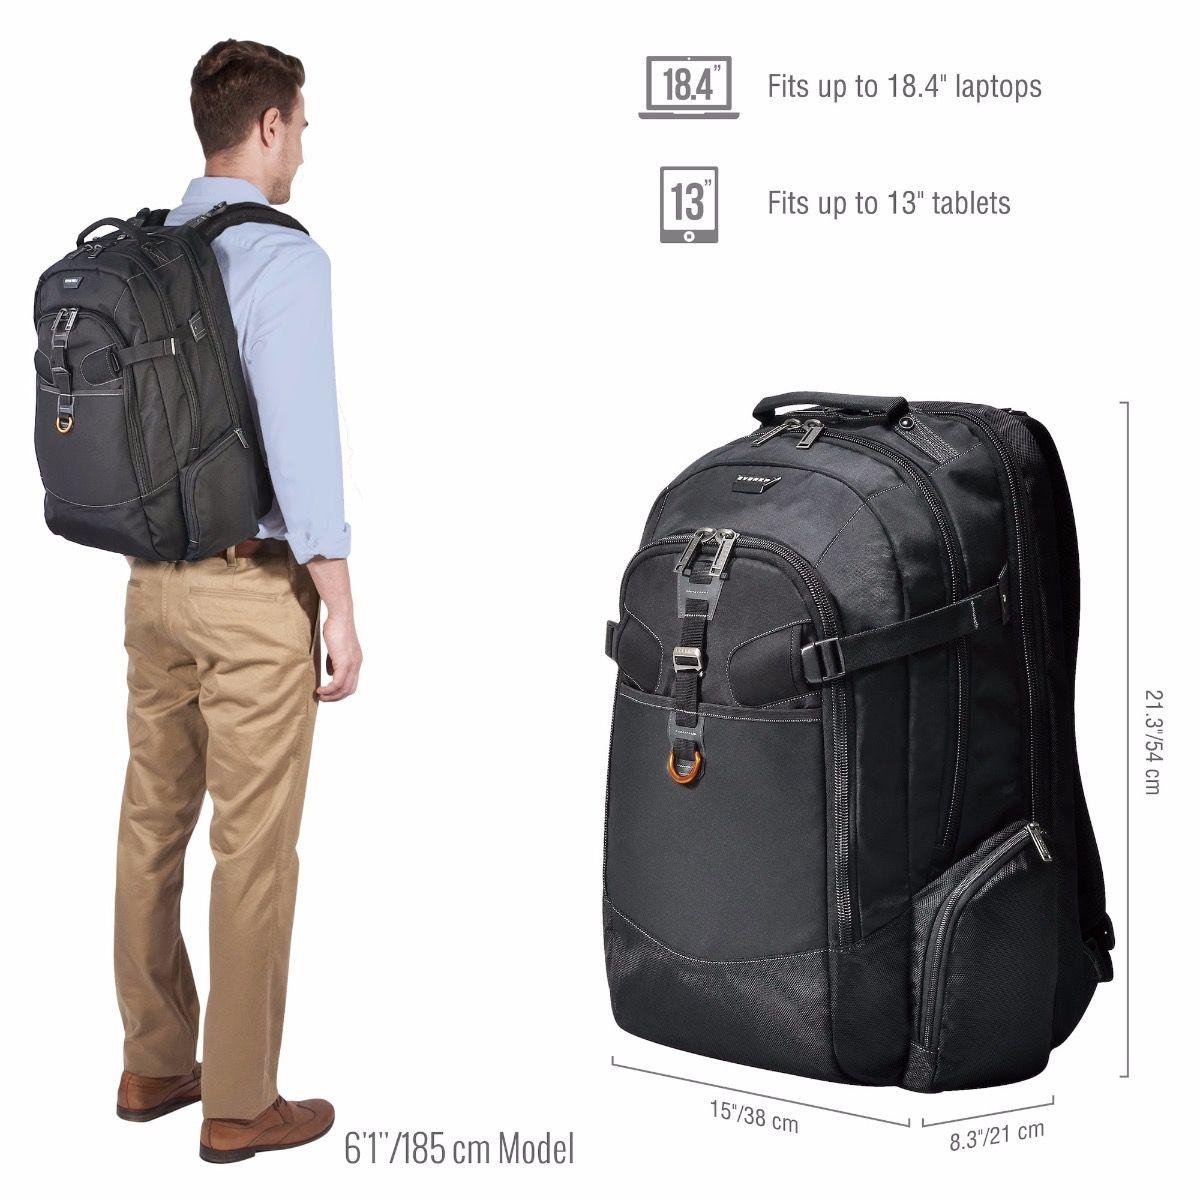 Everki Business 120 up to 18.4" Laptop Backpack - Marknet Technology